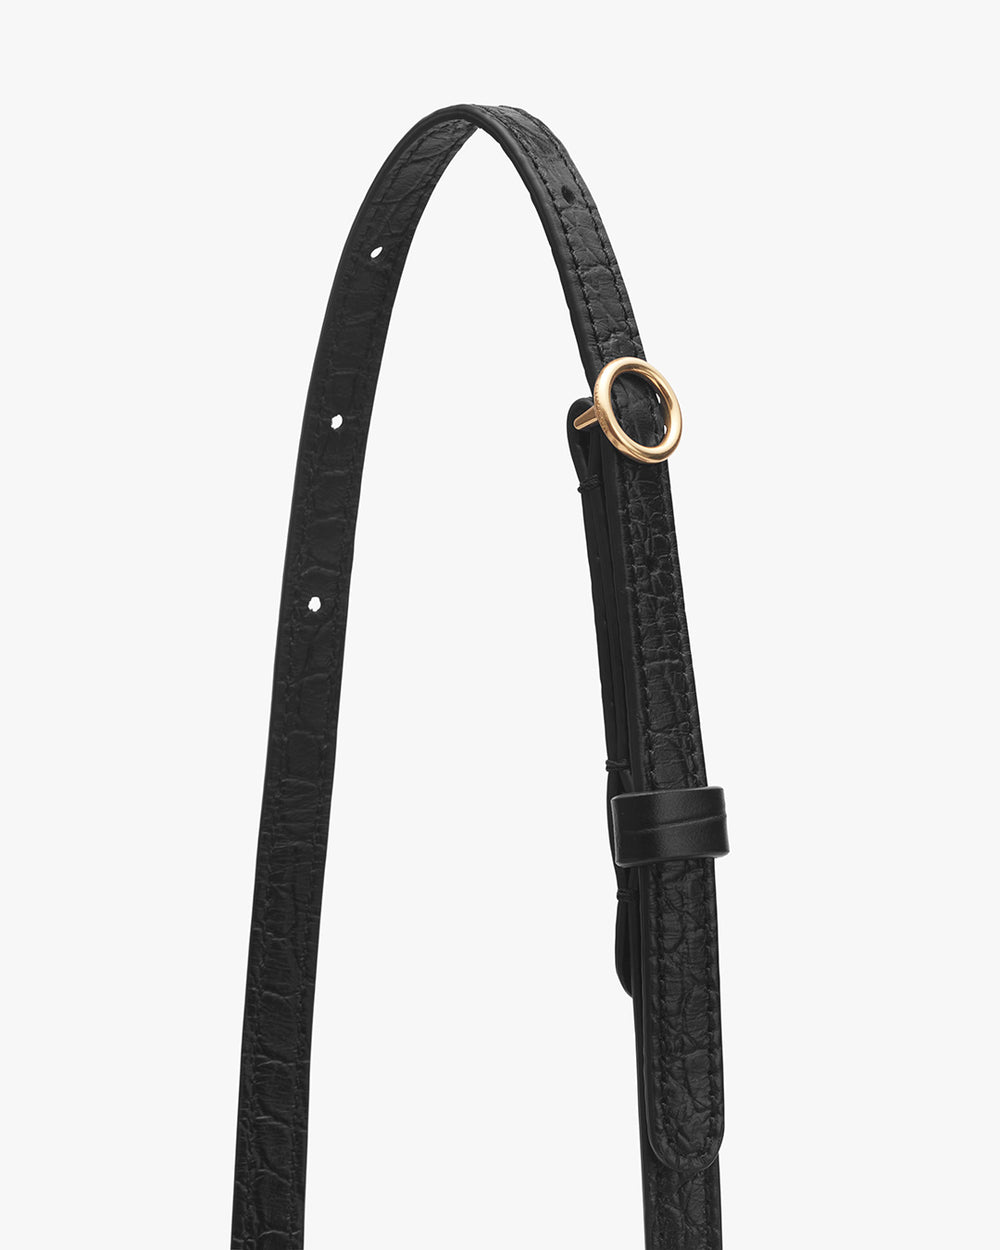 Thin Crossbody Strap - Black Leather